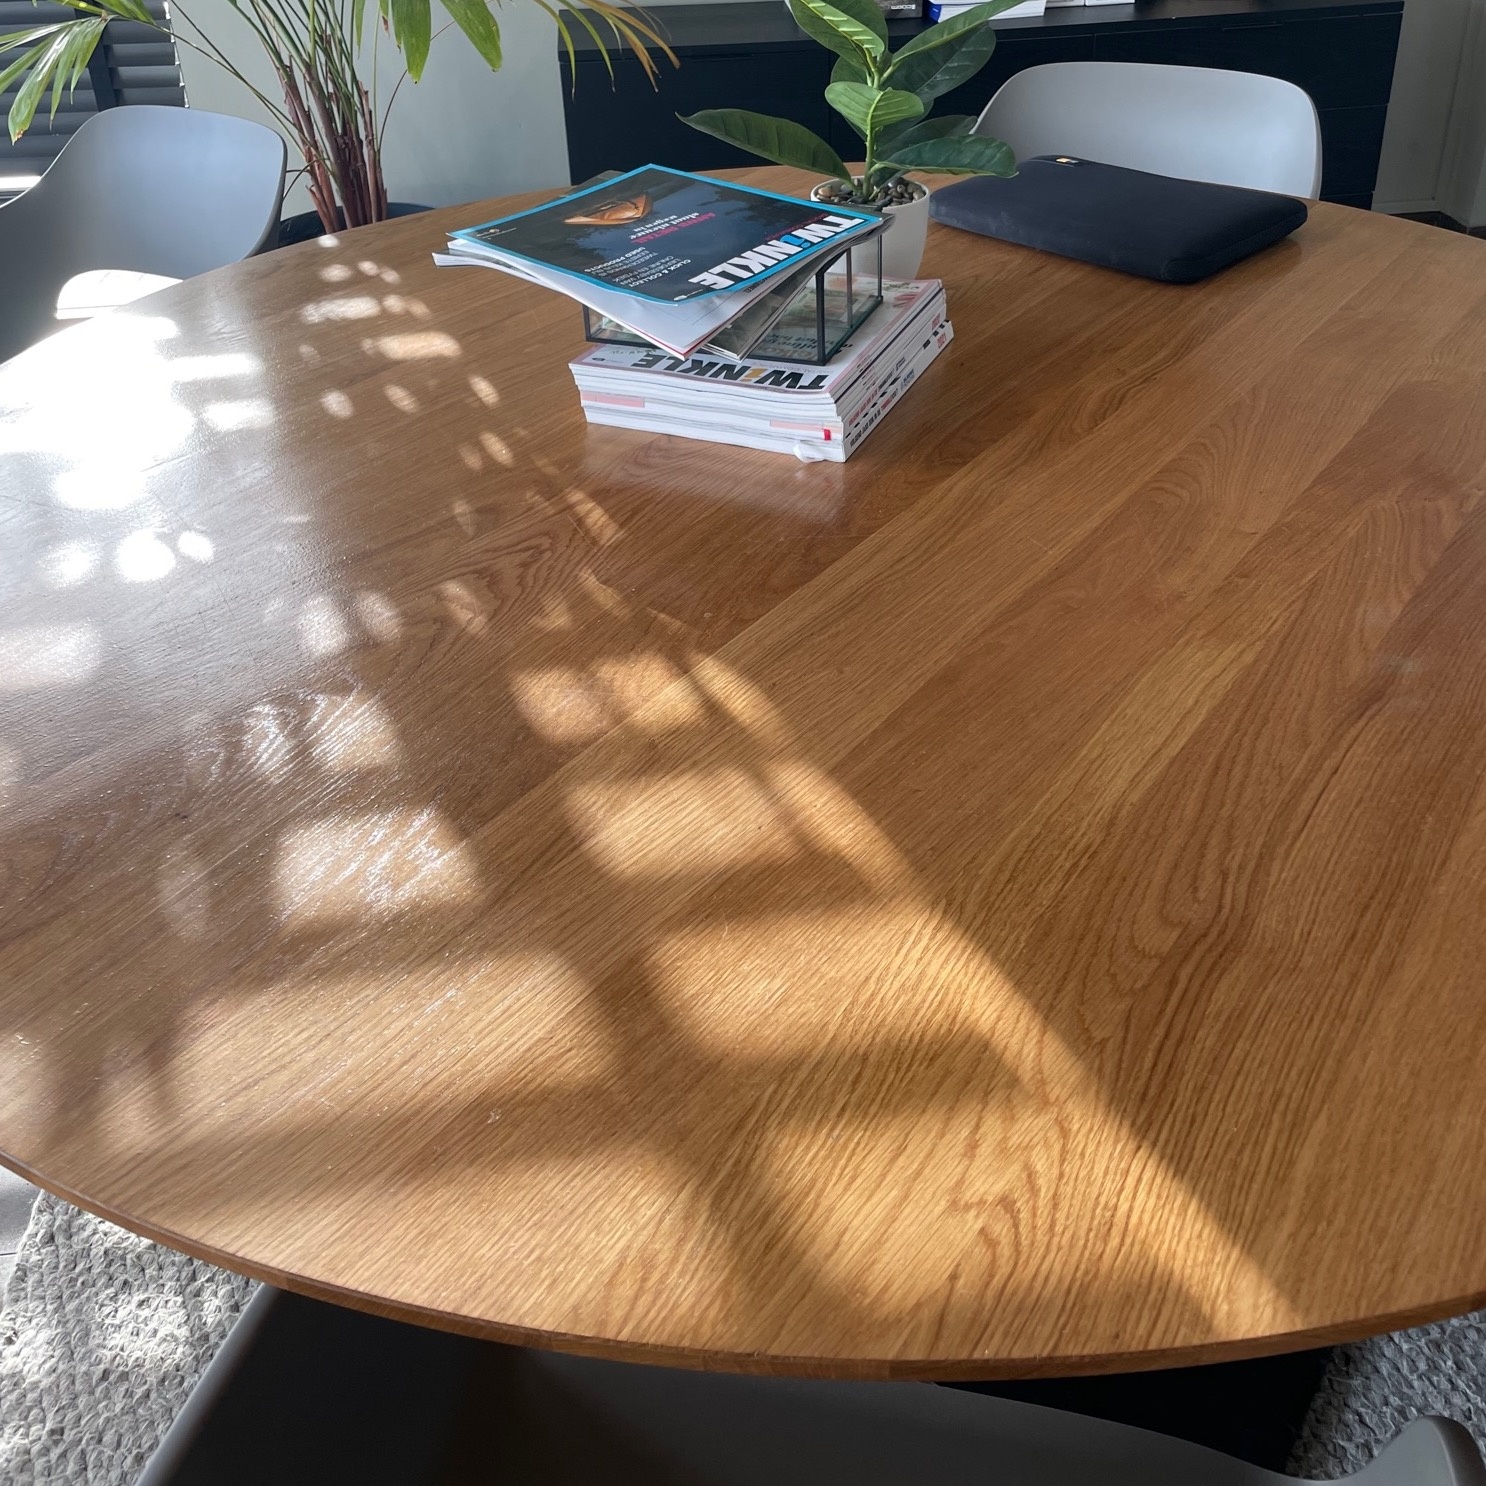  Eiken tafelblad rond - 3 cm dik (1-laag) - Diverse afmetingen - optioneel geborsteld - Foutvrij Europees eikenhout - verlijmd kd 10-12%